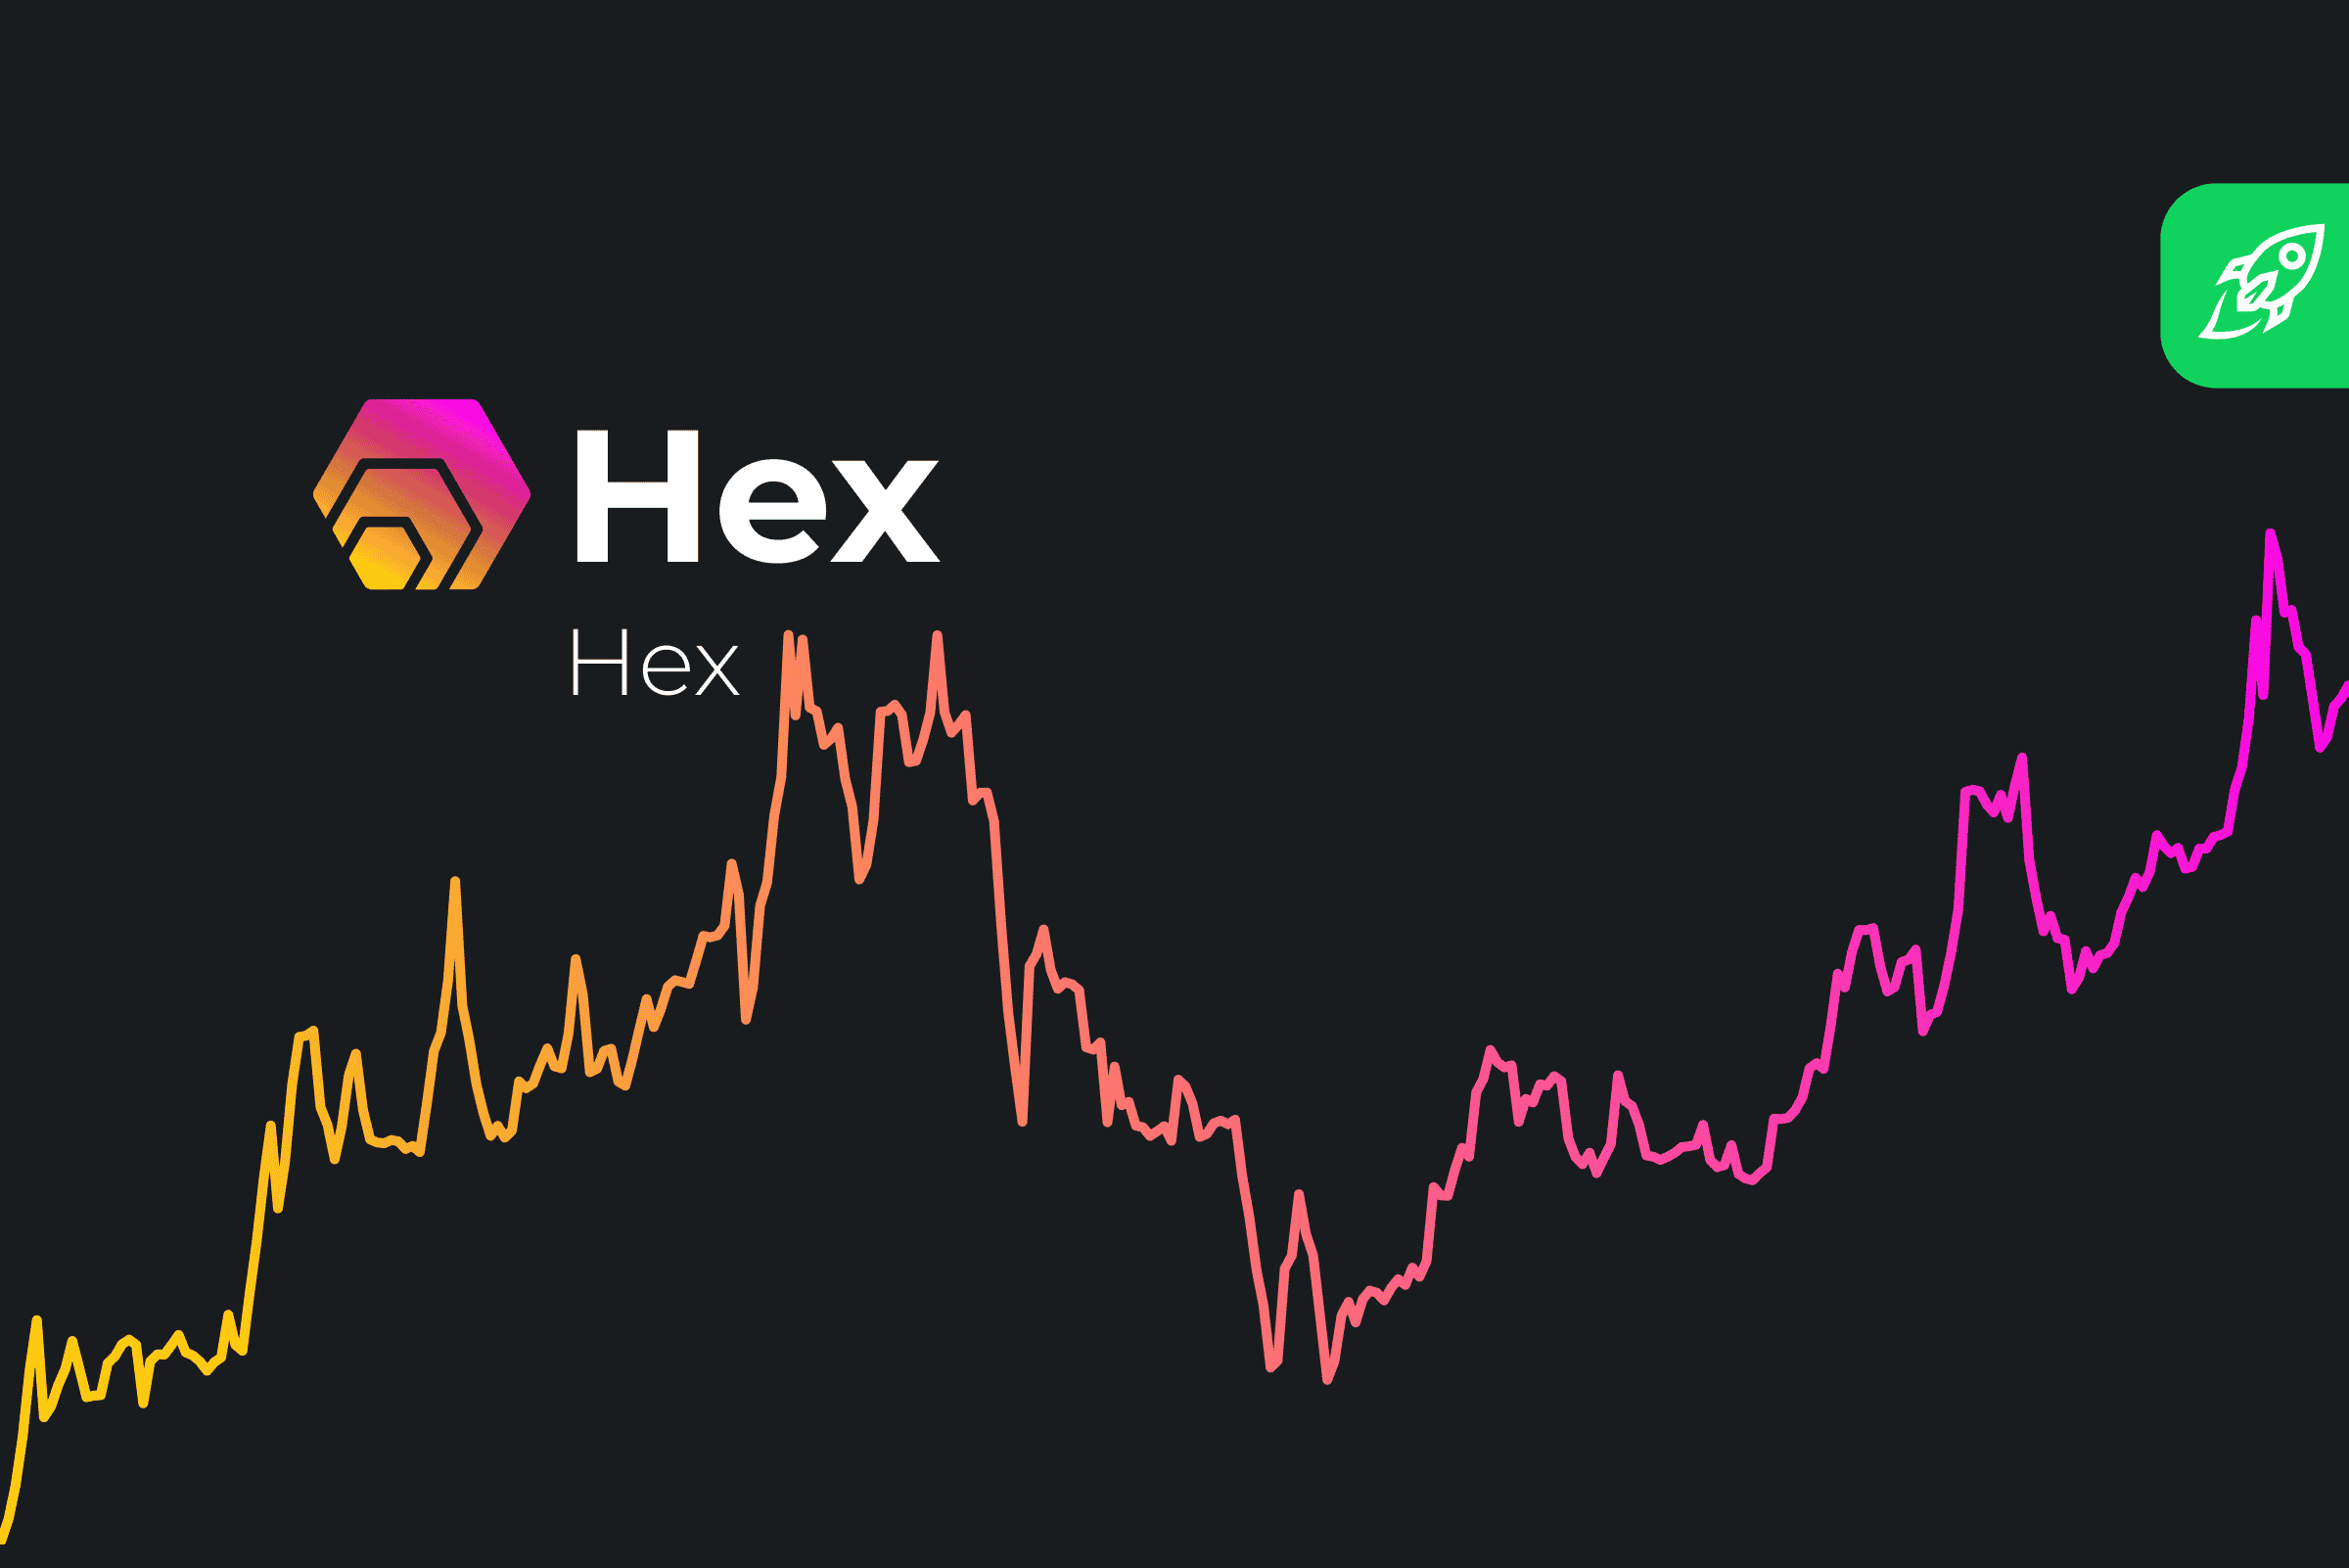 HEX (HEX) Price Prediction - 